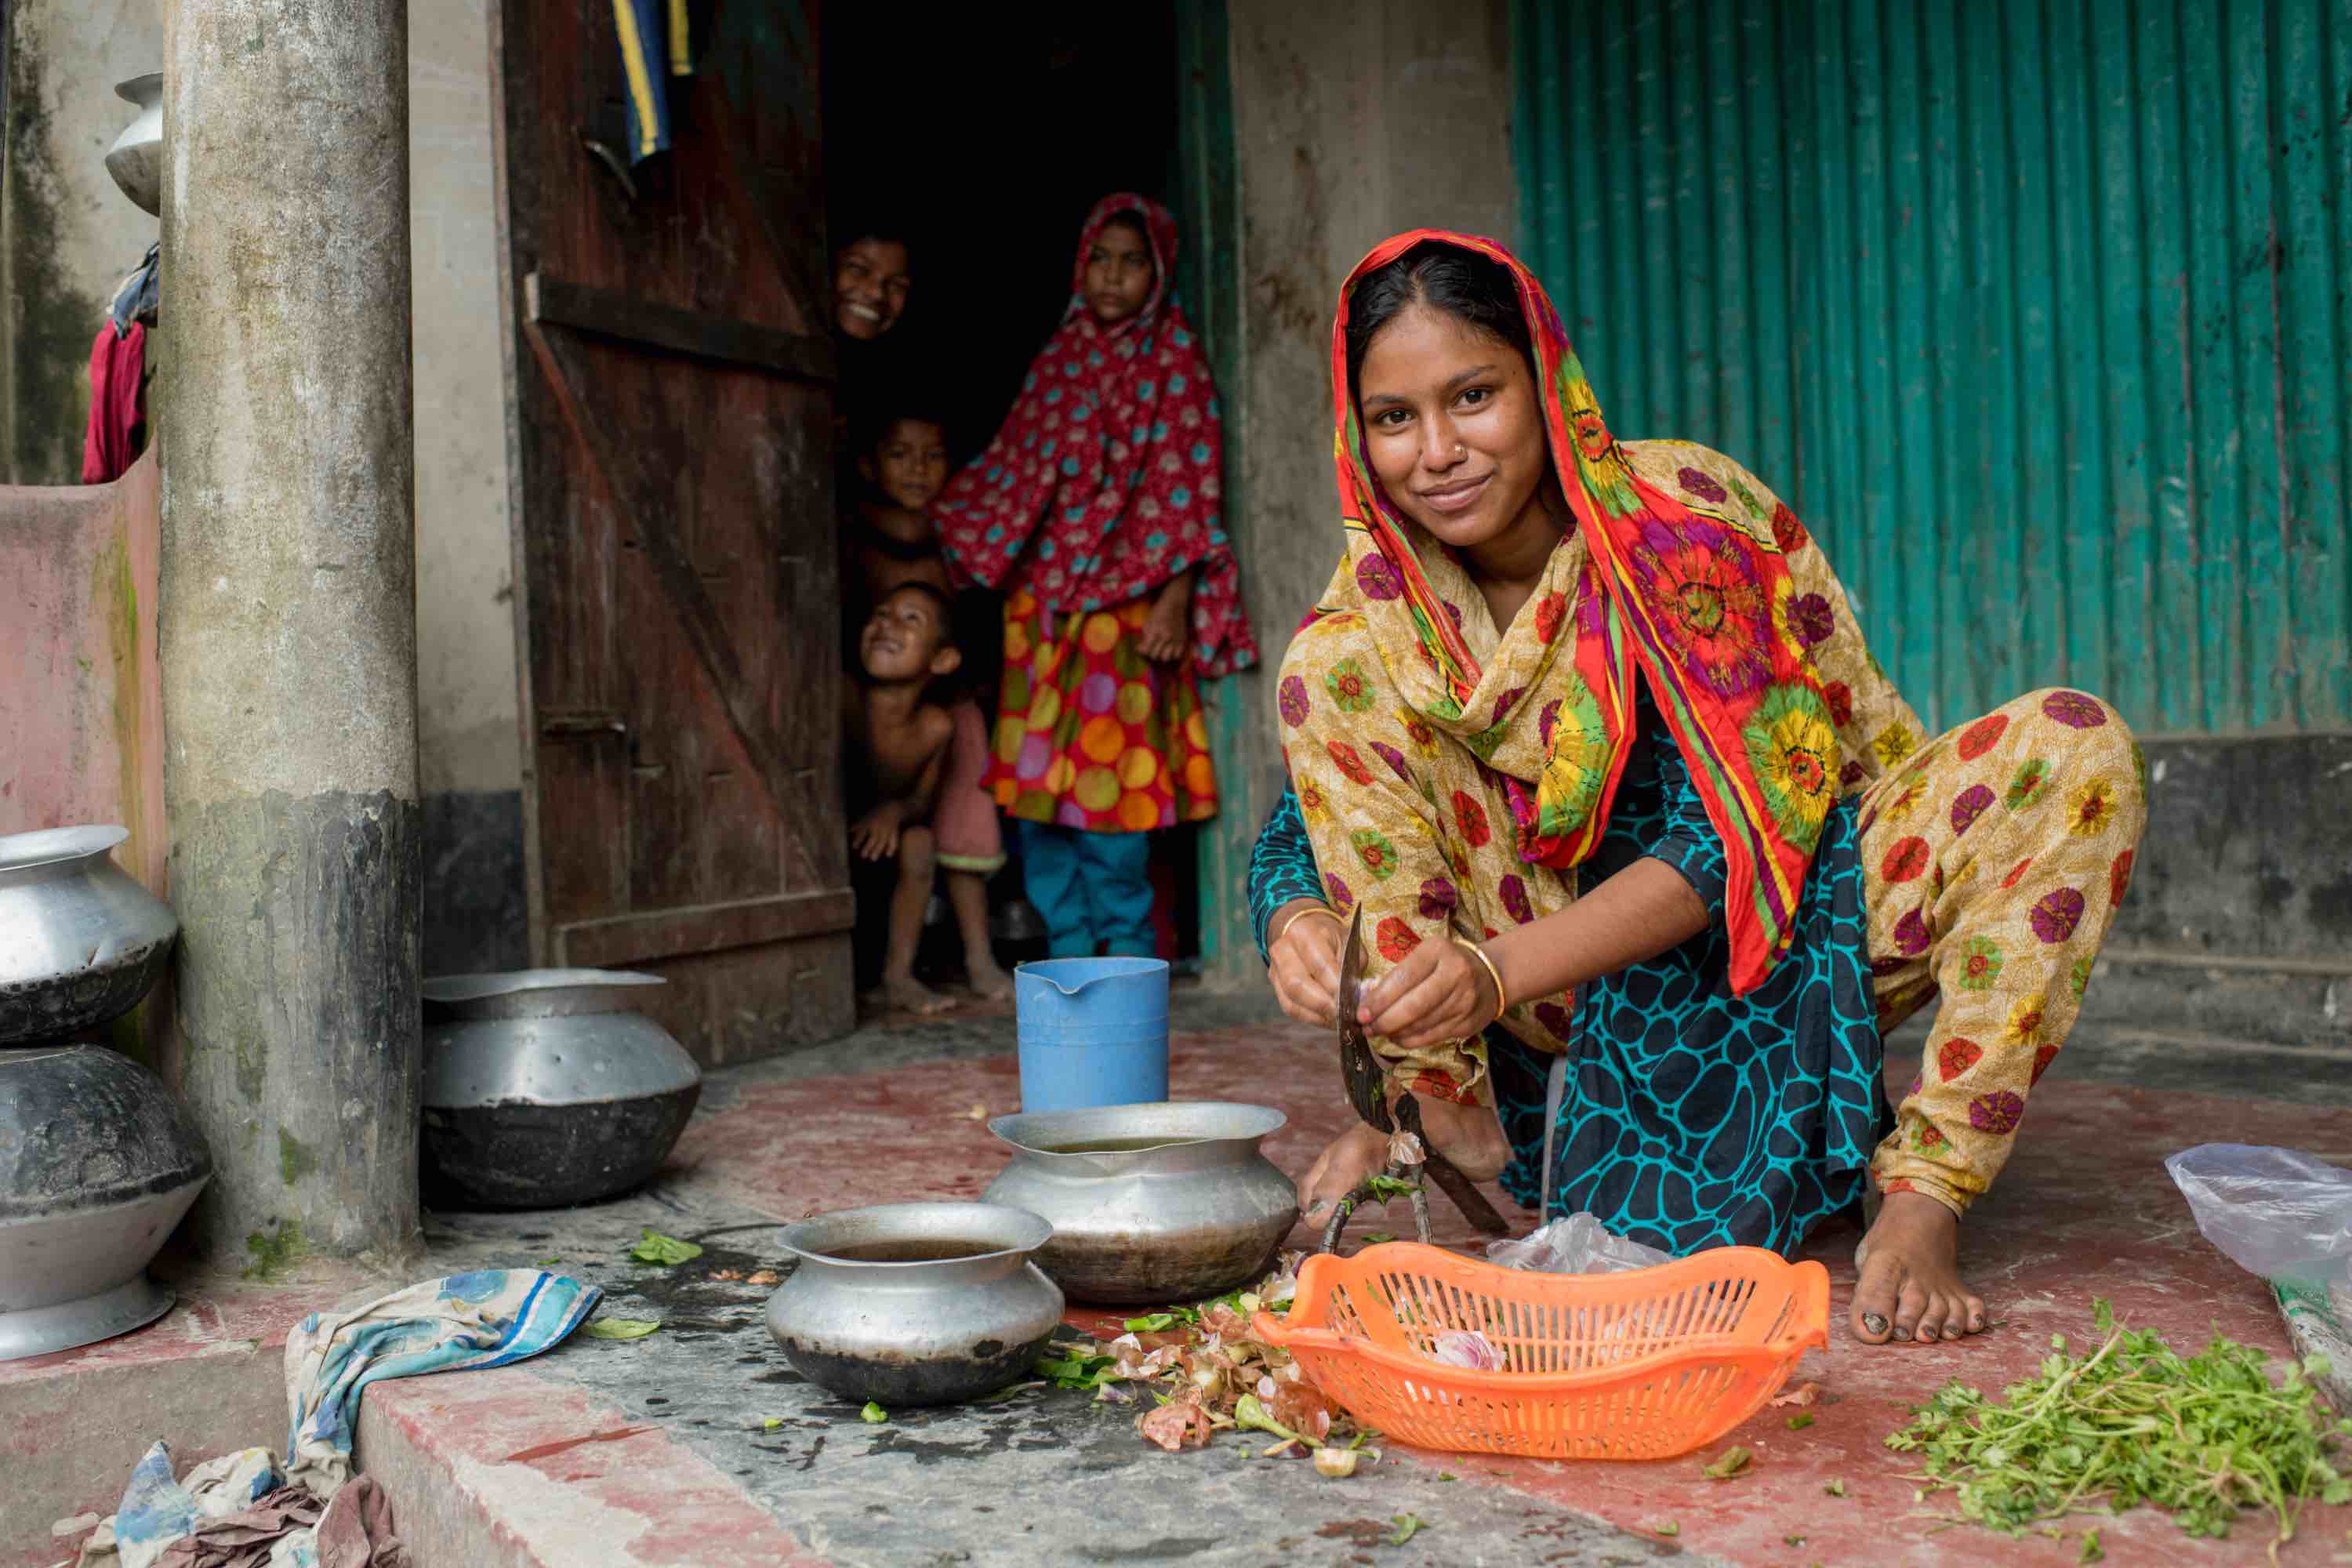 A Bangladeshi woman smiles as she cuts vegetables. 